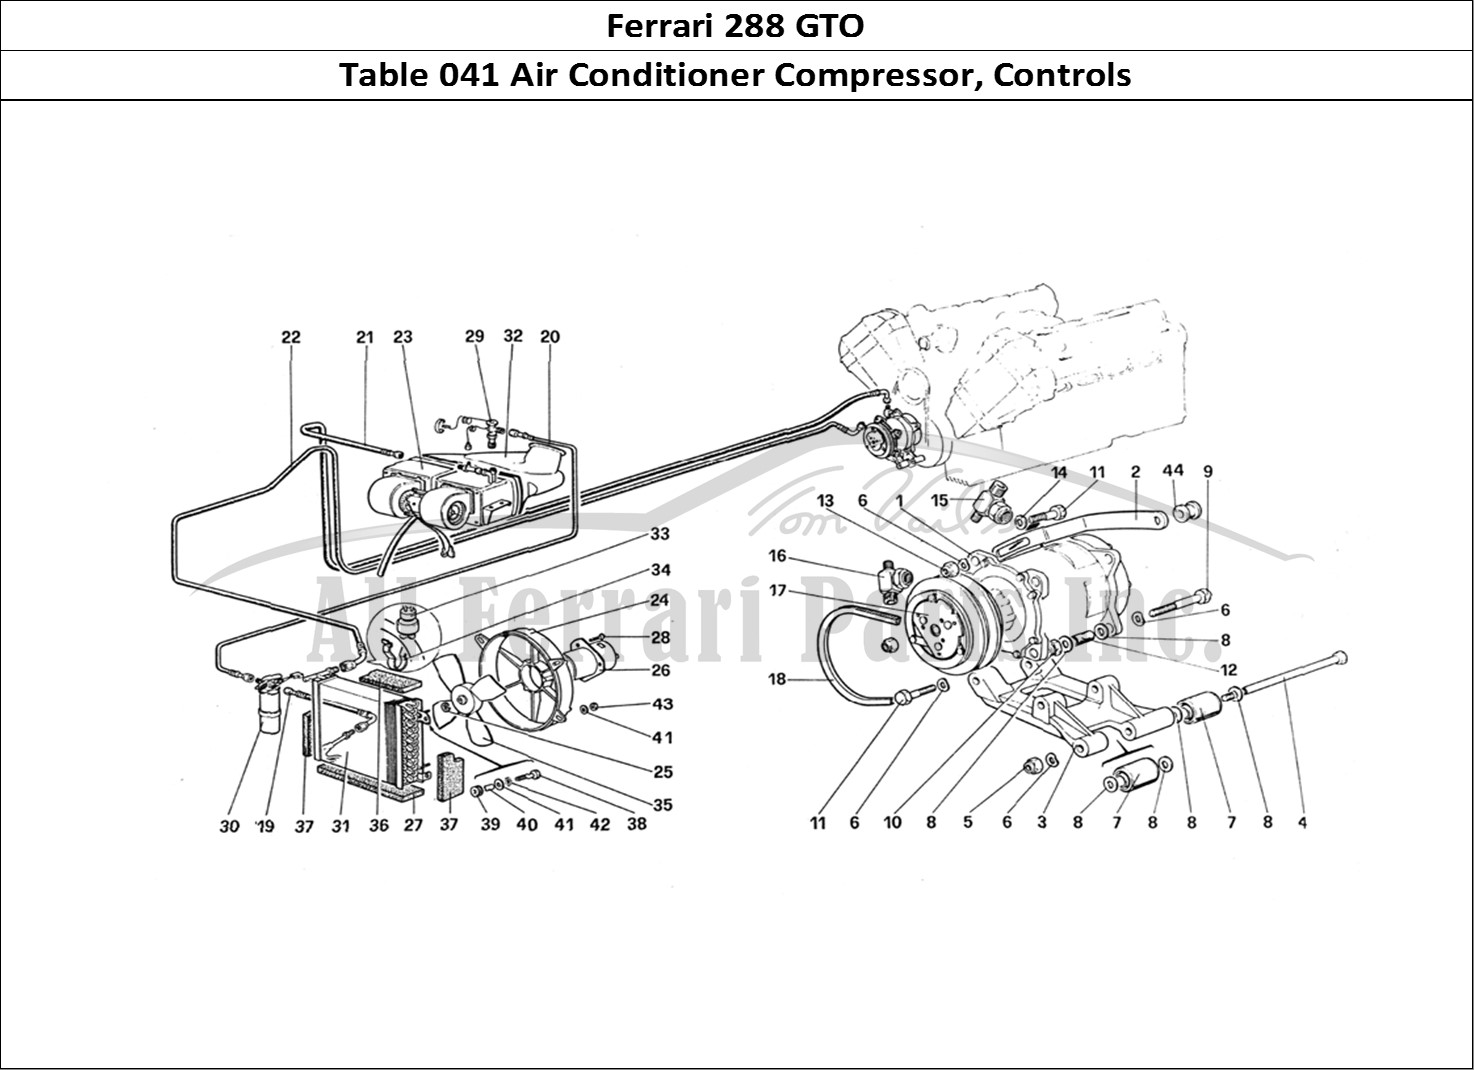 Ferrari Parts Ferrari 288 GTO Page 041 Air Conditioning Compress